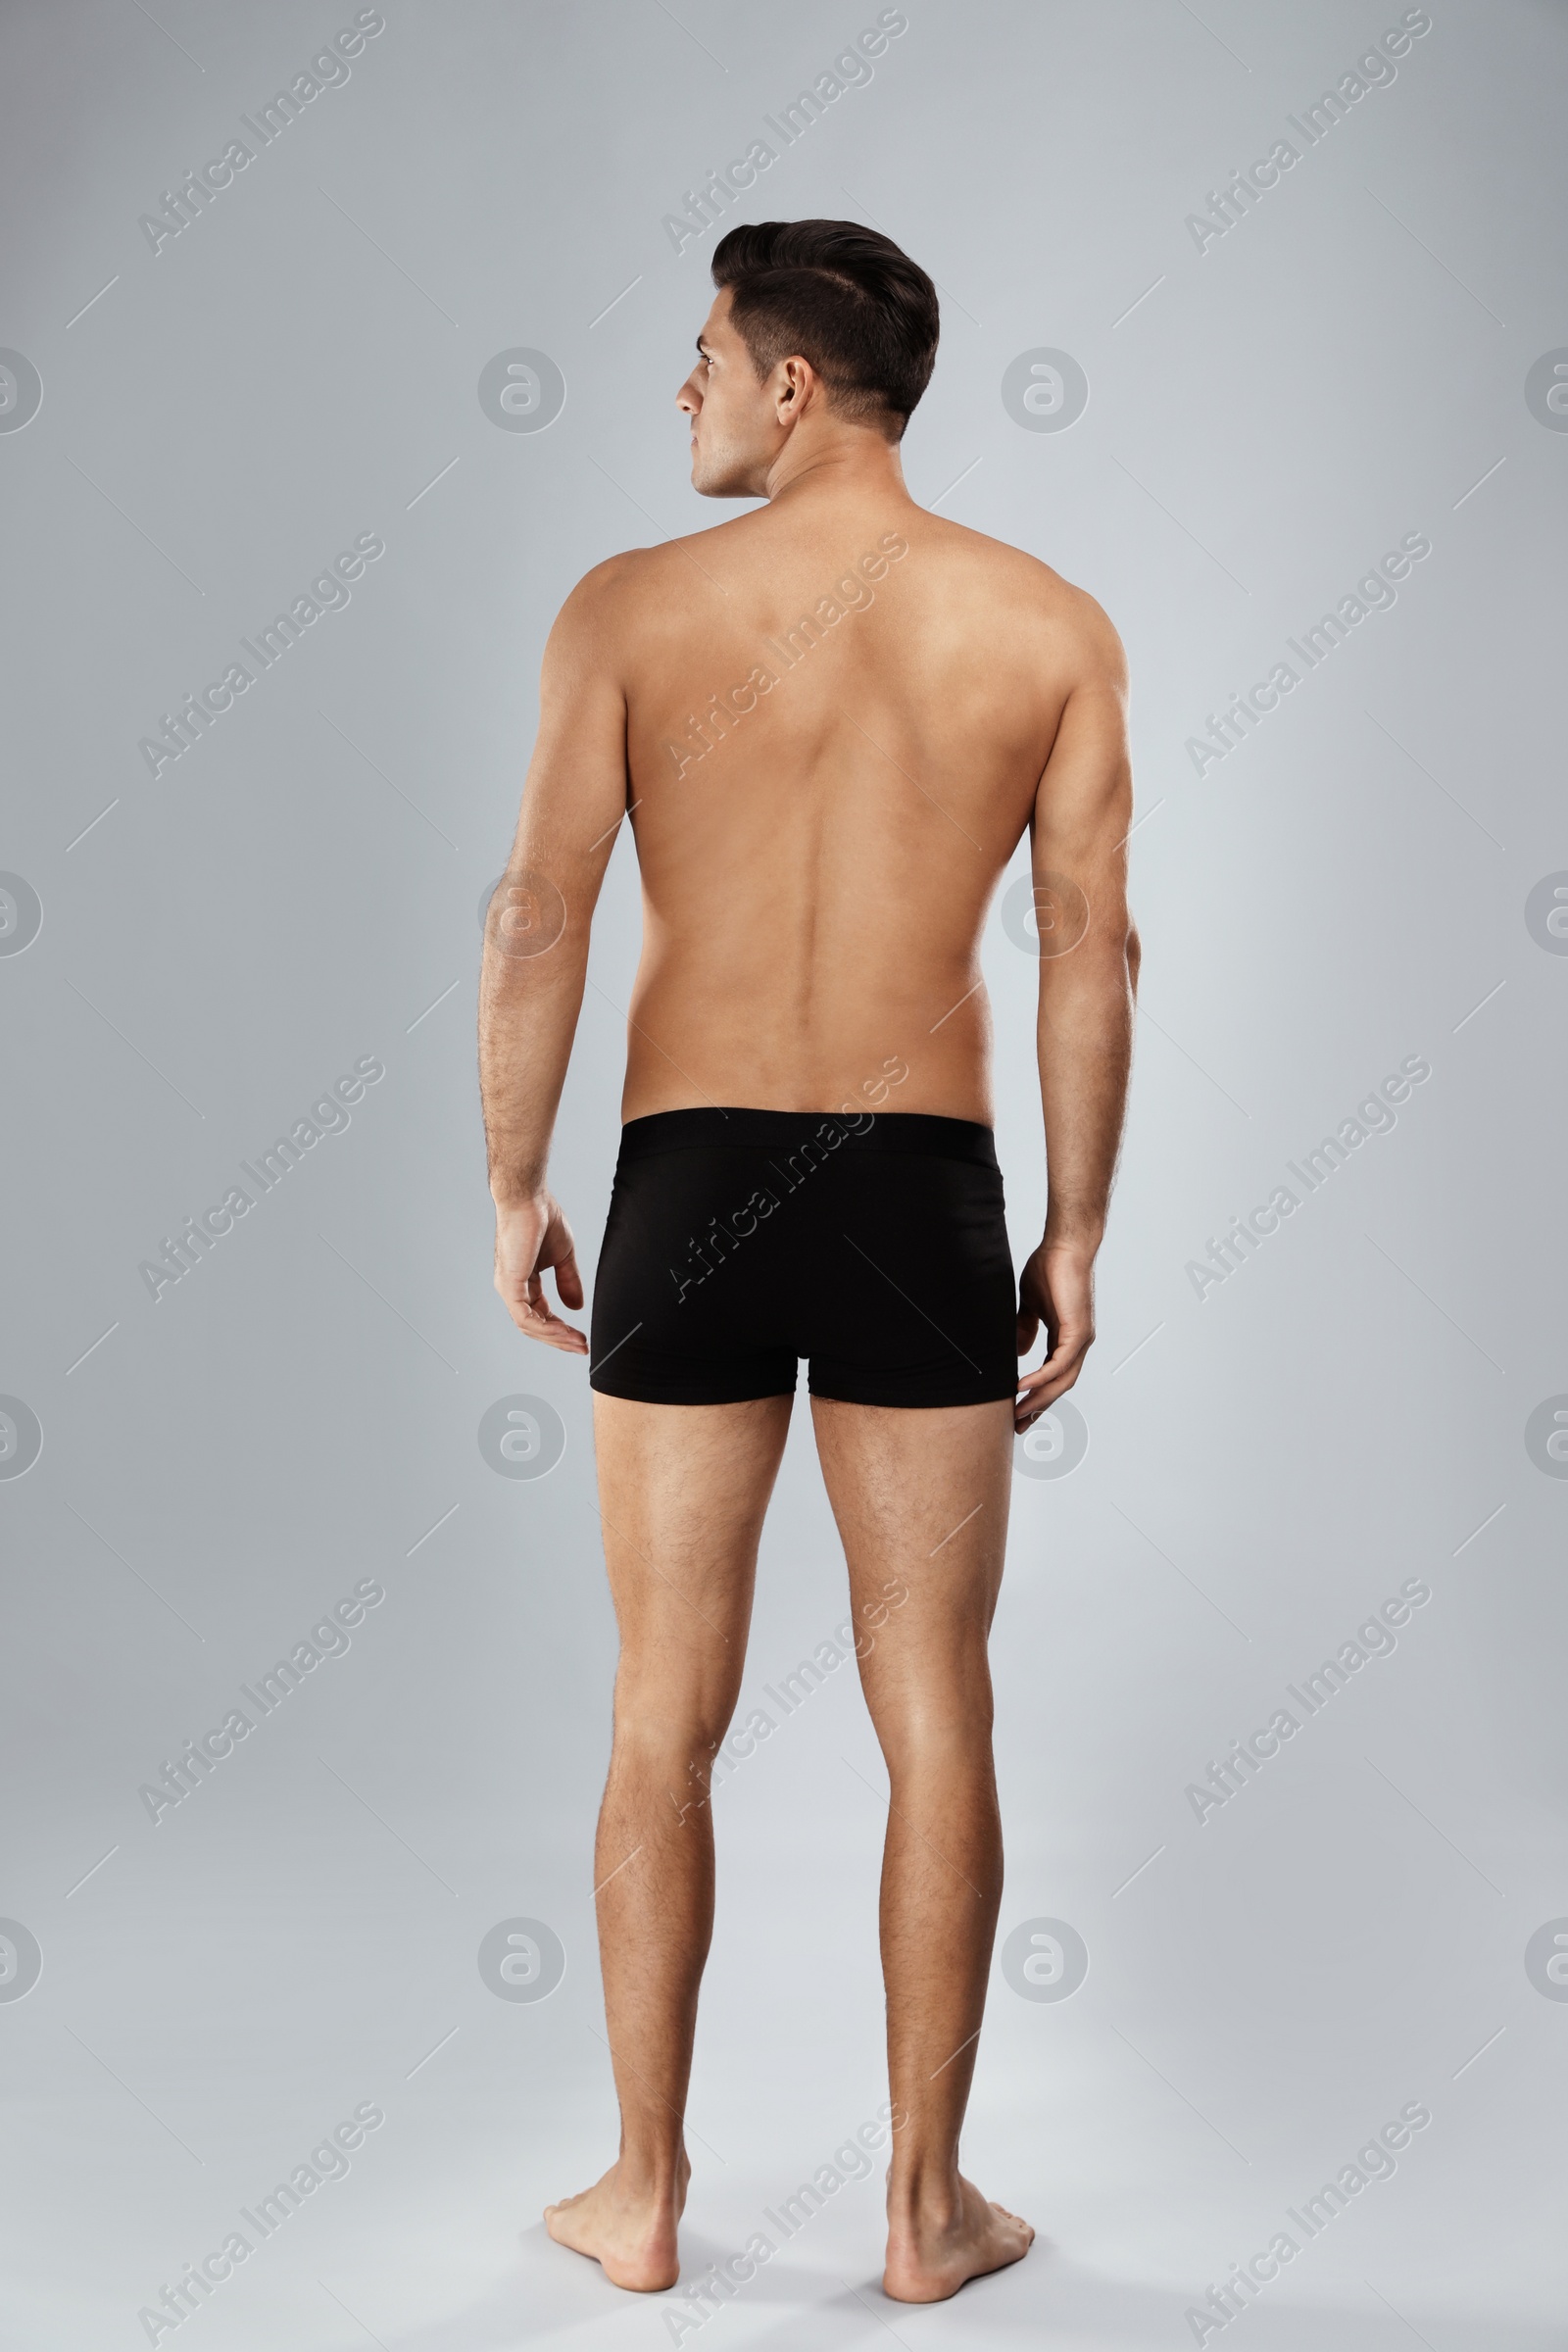 Photo of Handsome man in black underwear on light grey background, back view